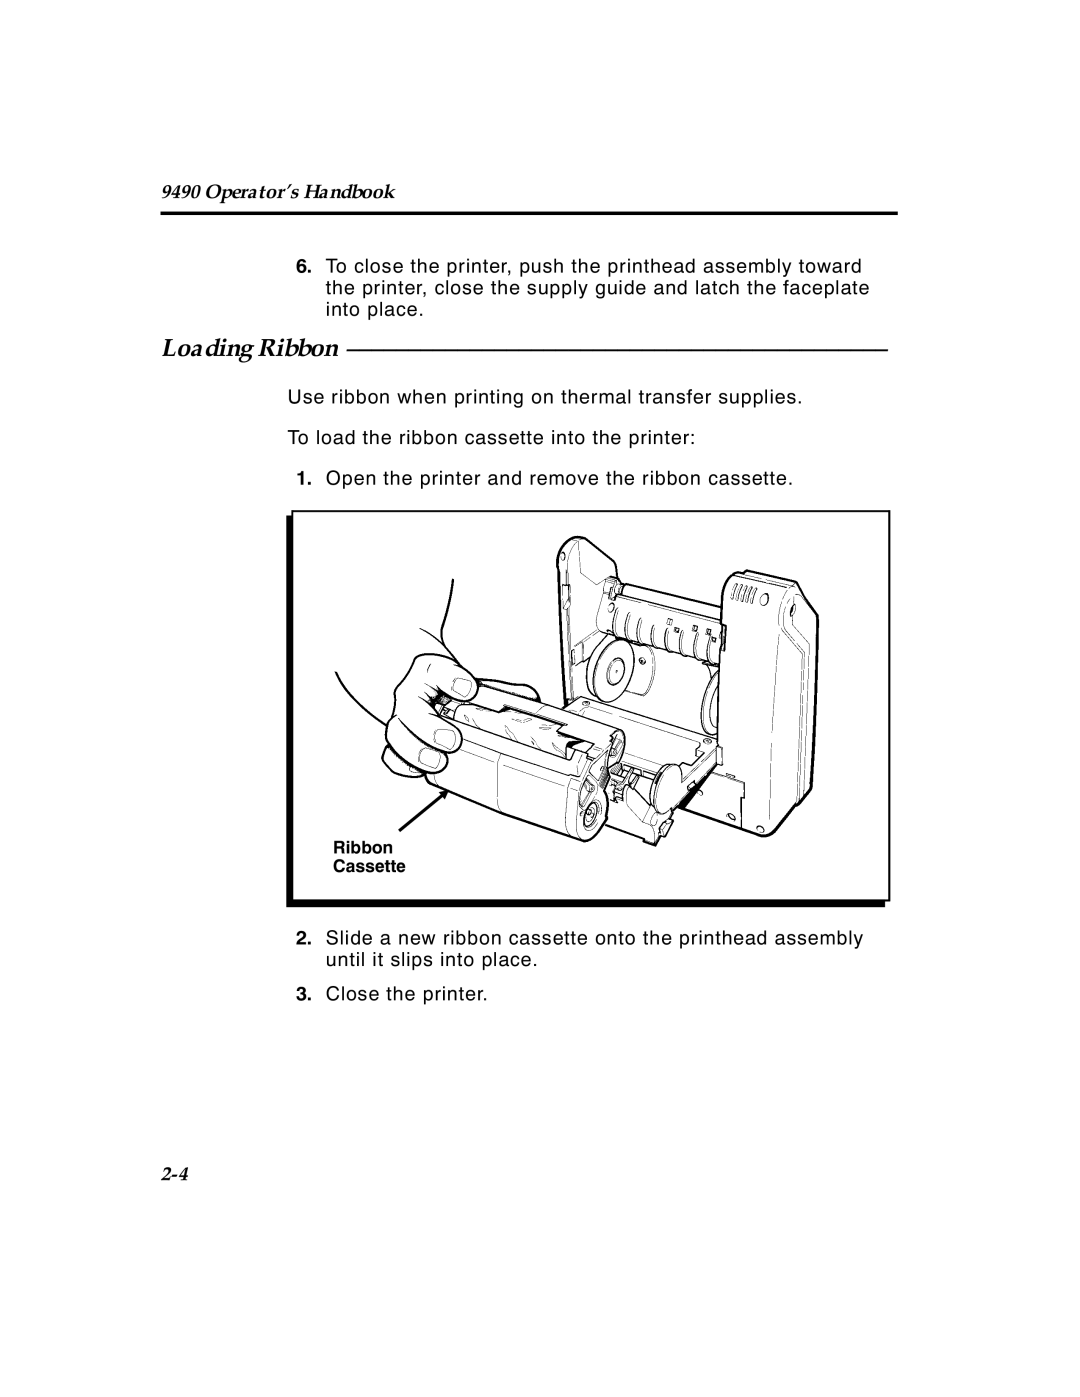 Paxar 4 manual Loading Ribbon, Operator’s Handbook 